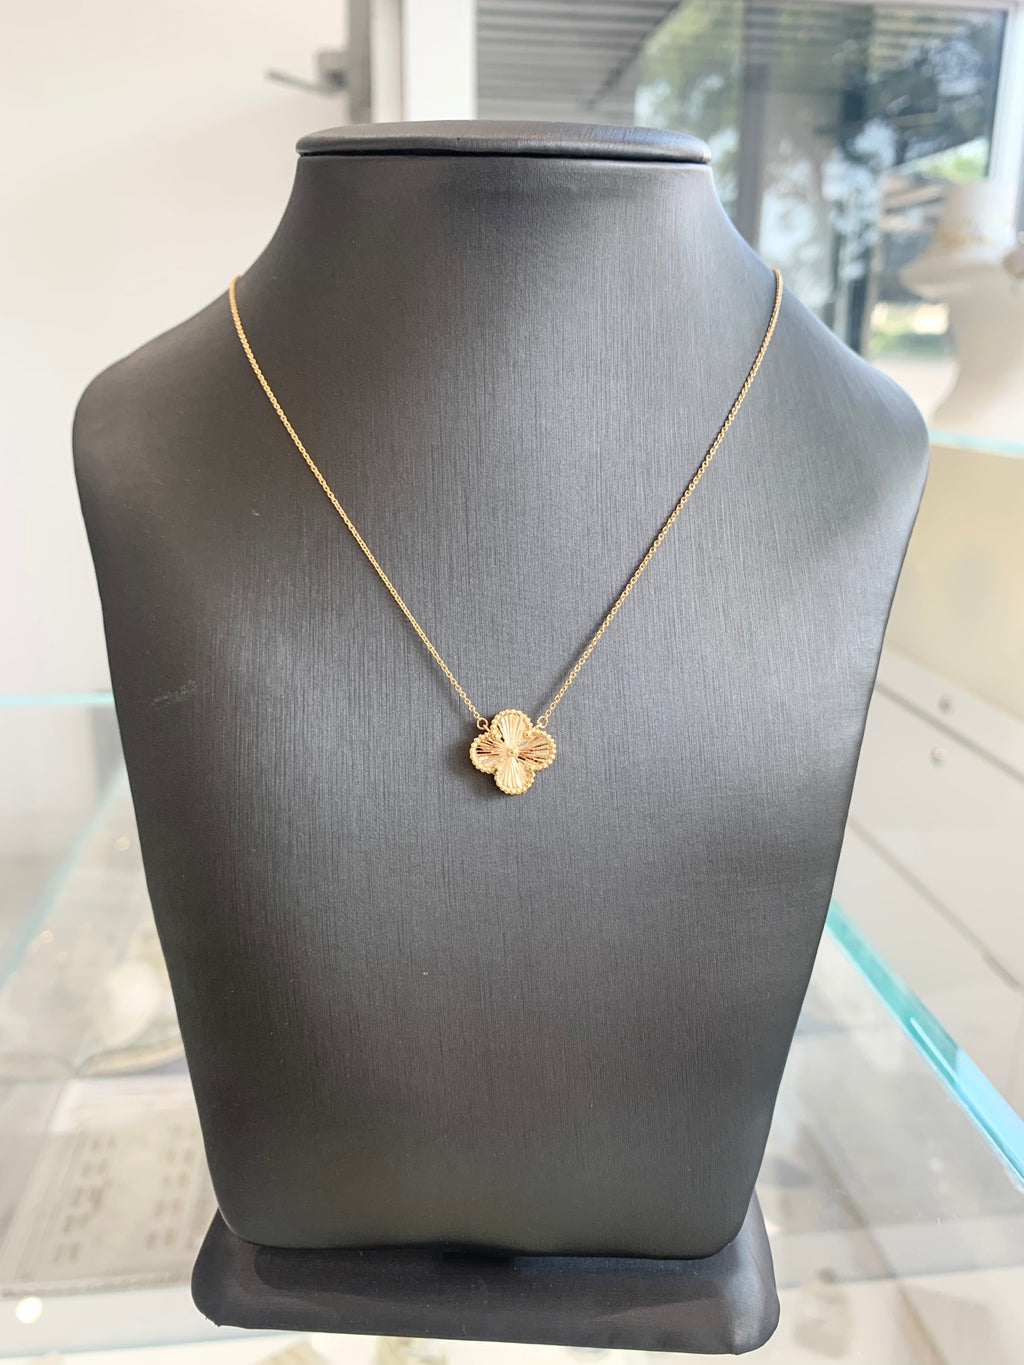 18kt Solid Gold Diamond Cut Charm Clover Leaf Pendant Necklace Ladies